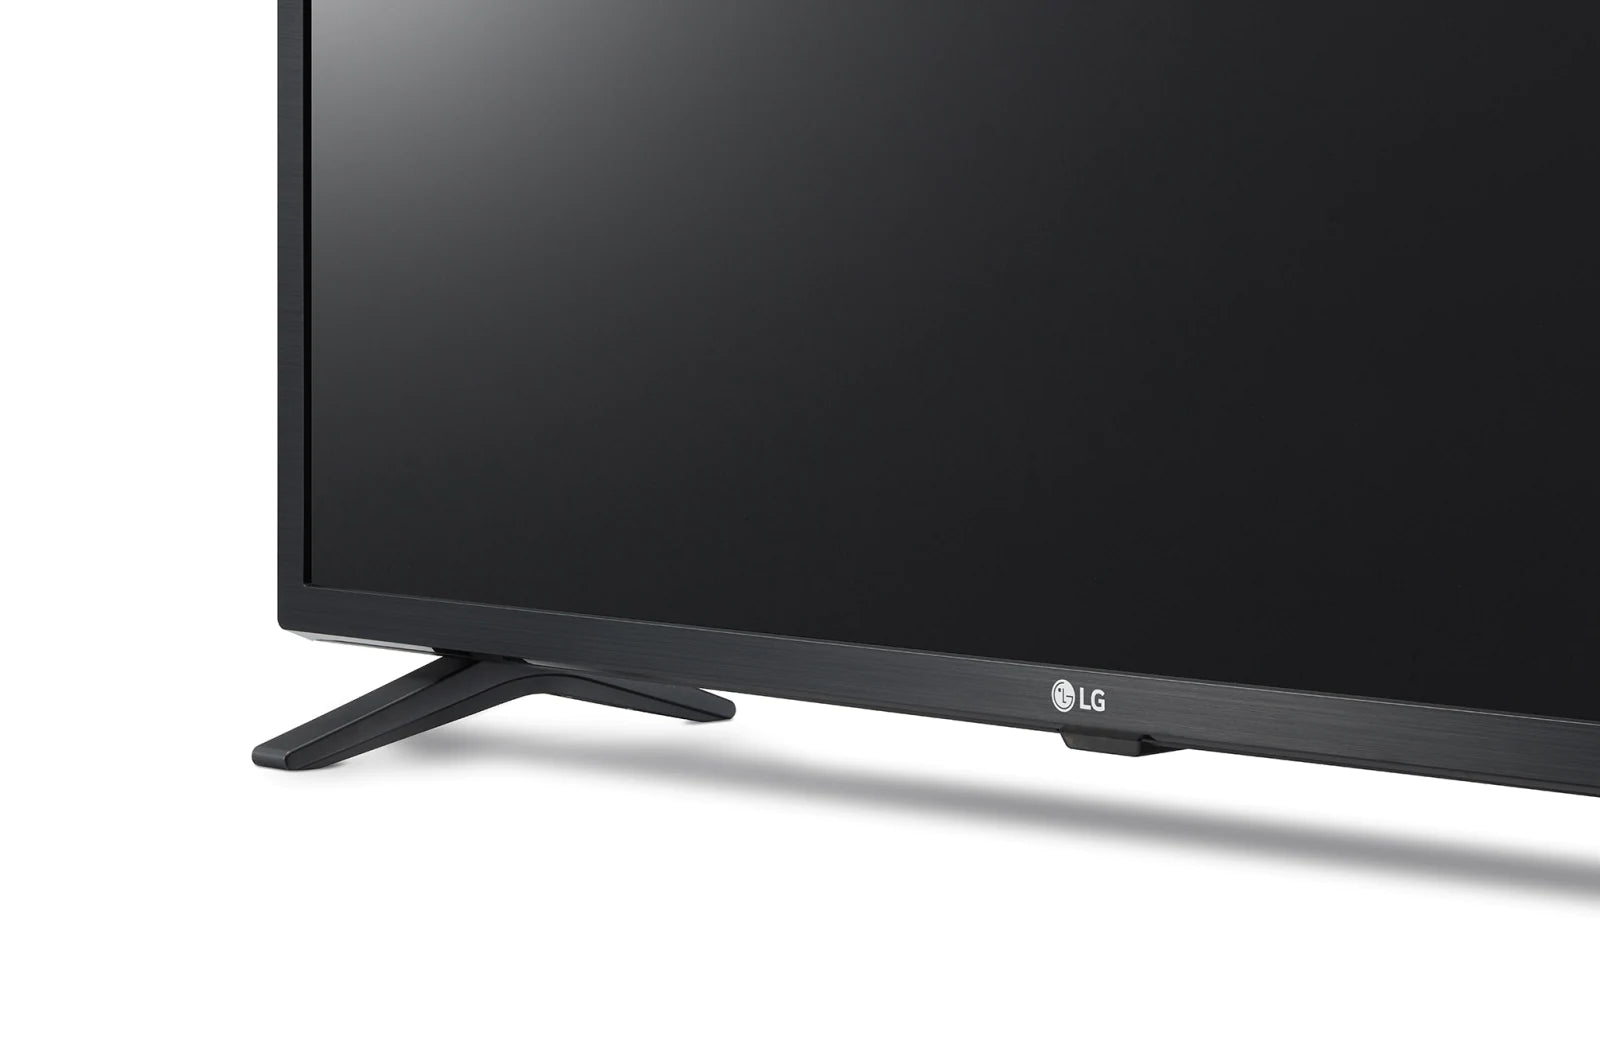 LG 樂金 LQ6350 FHD 電視